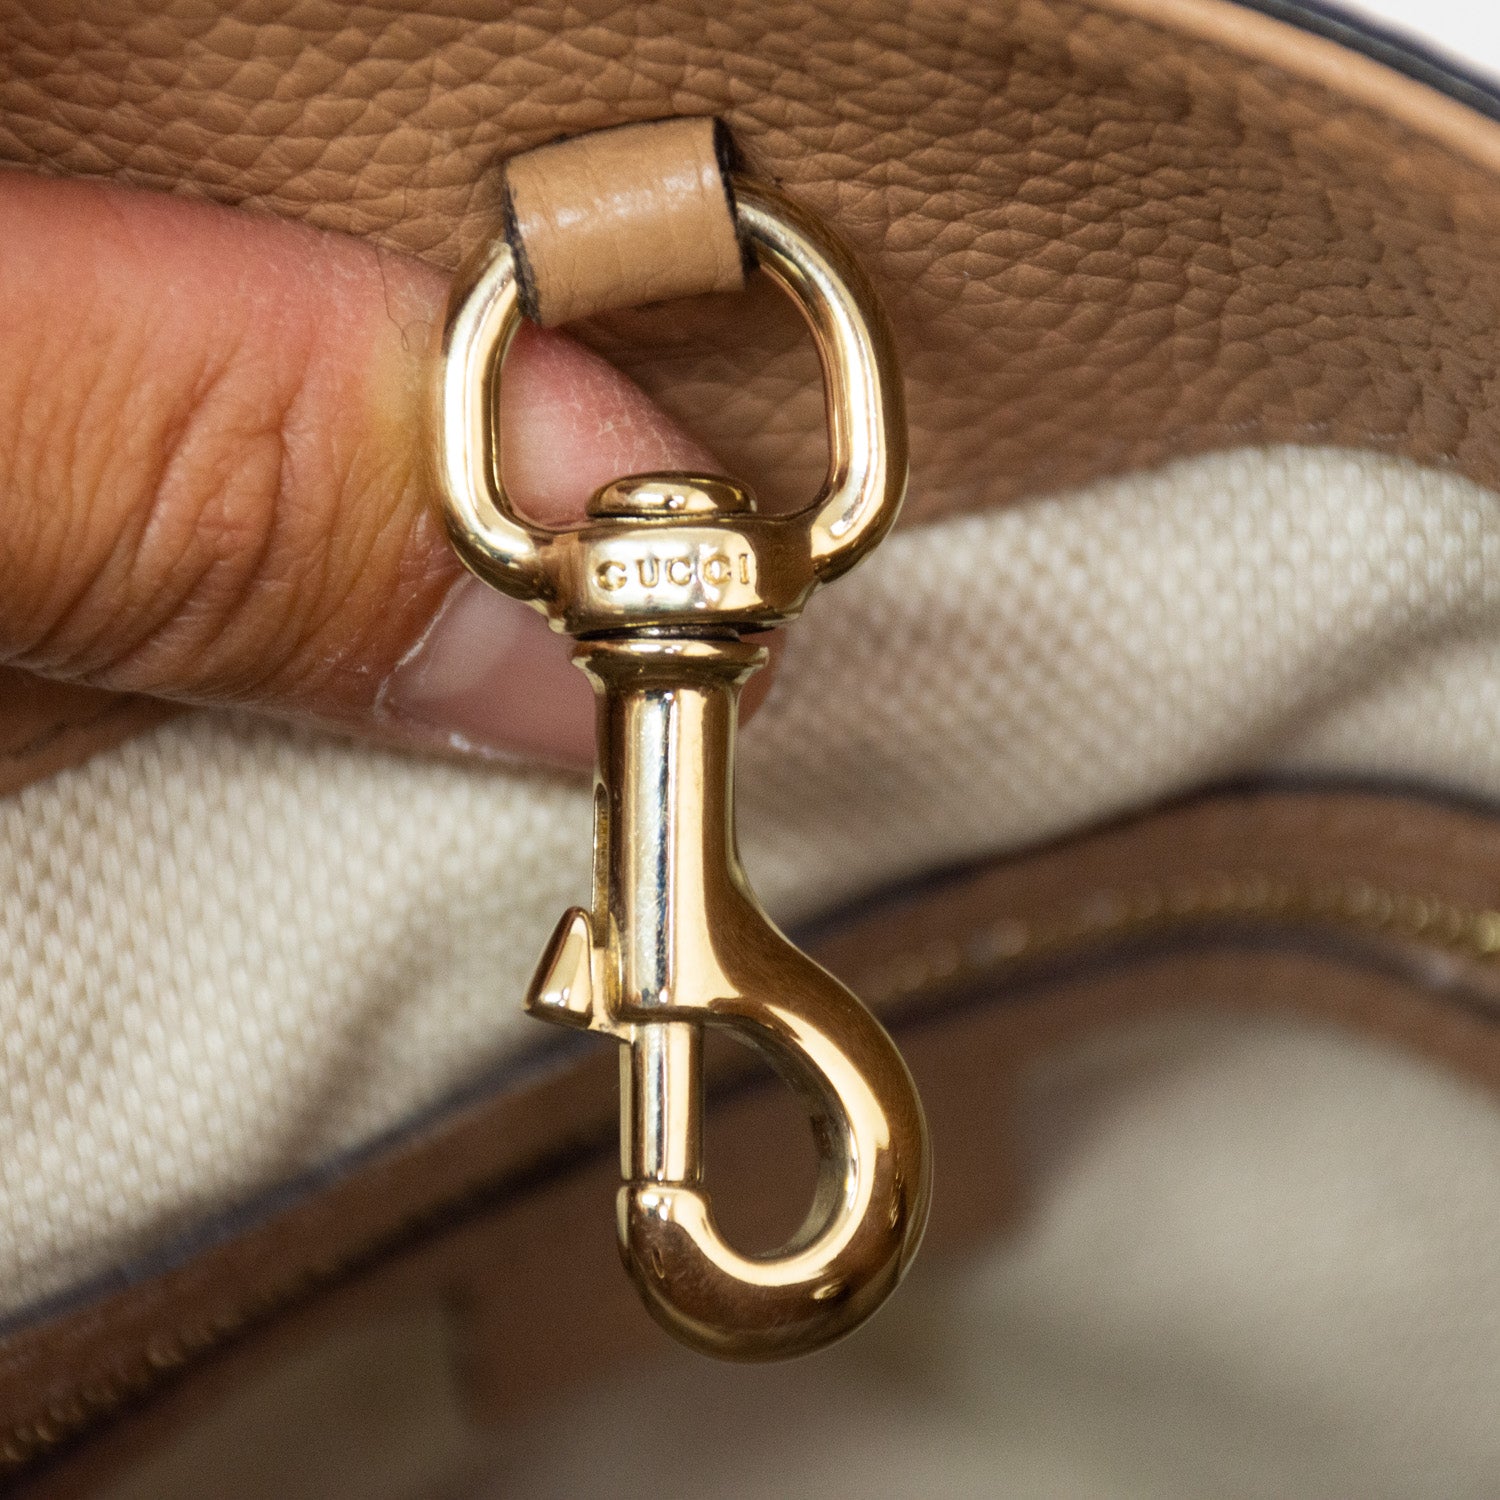 Gucci Soho Pebbled Leather Chain Shoulder Bag - 308982